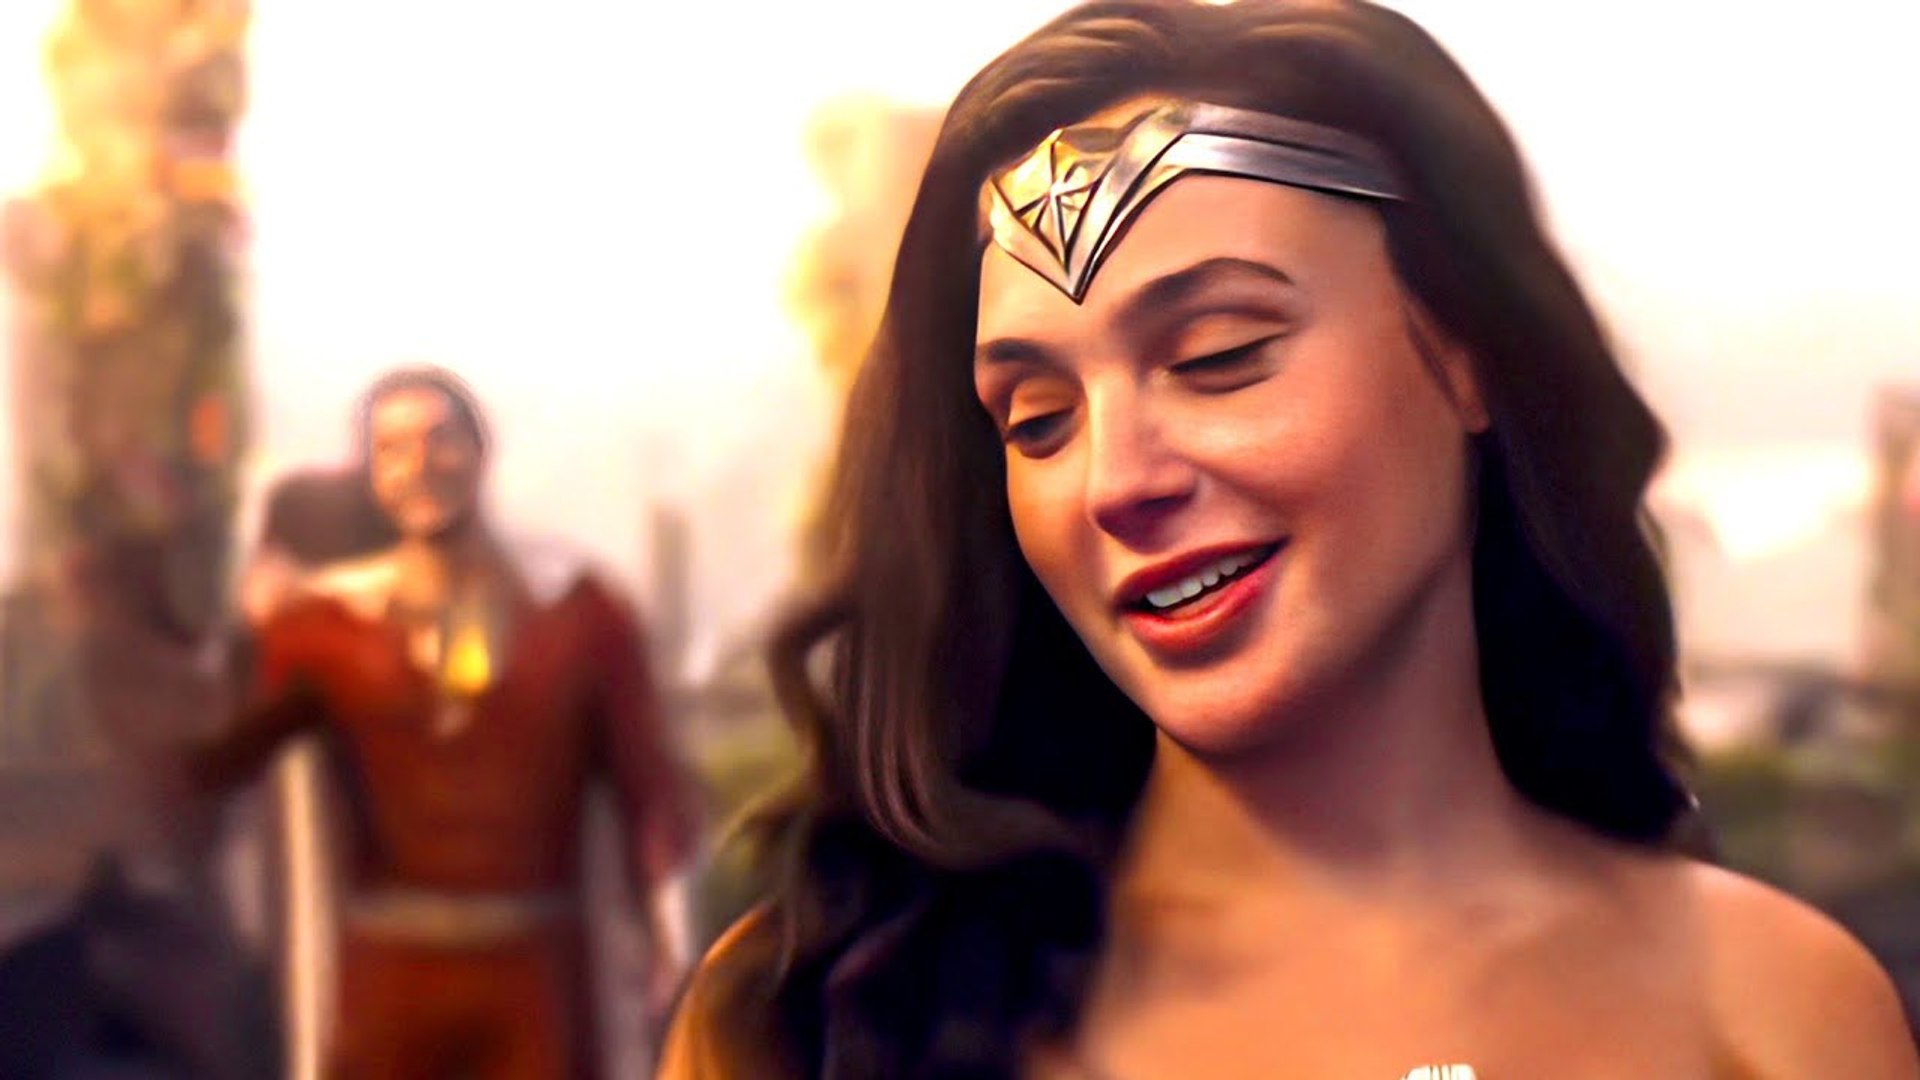 Wonder Woman Cameo HD, Shazam Fury of the Gods